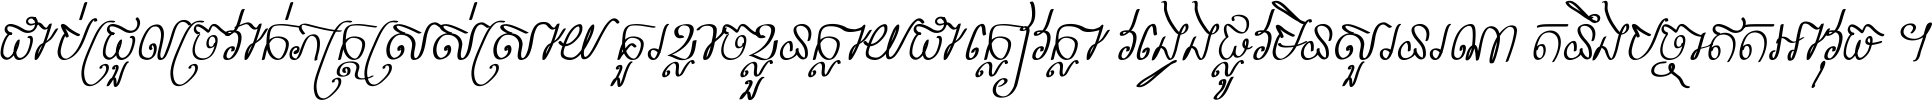 ASvadek Khmer Calligraphy Italic